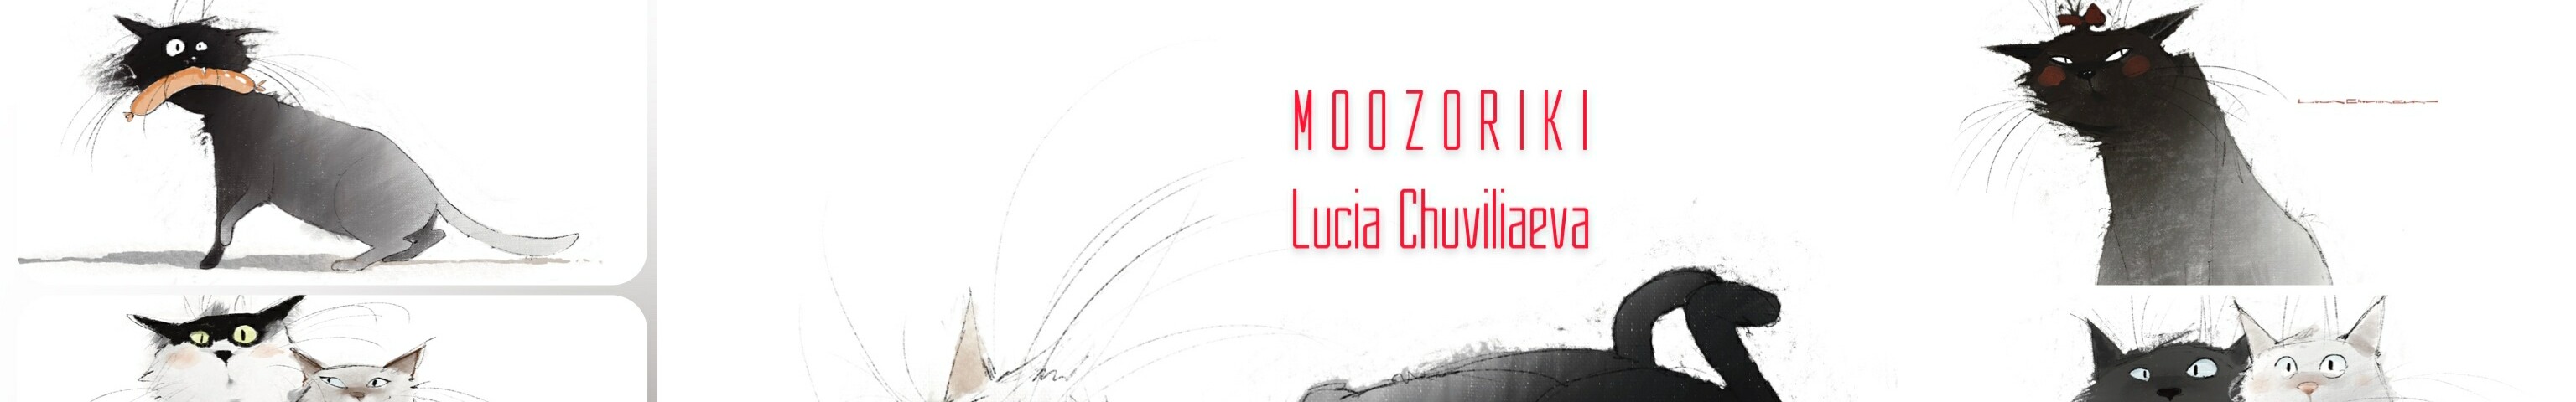 creator cover Moozoriki